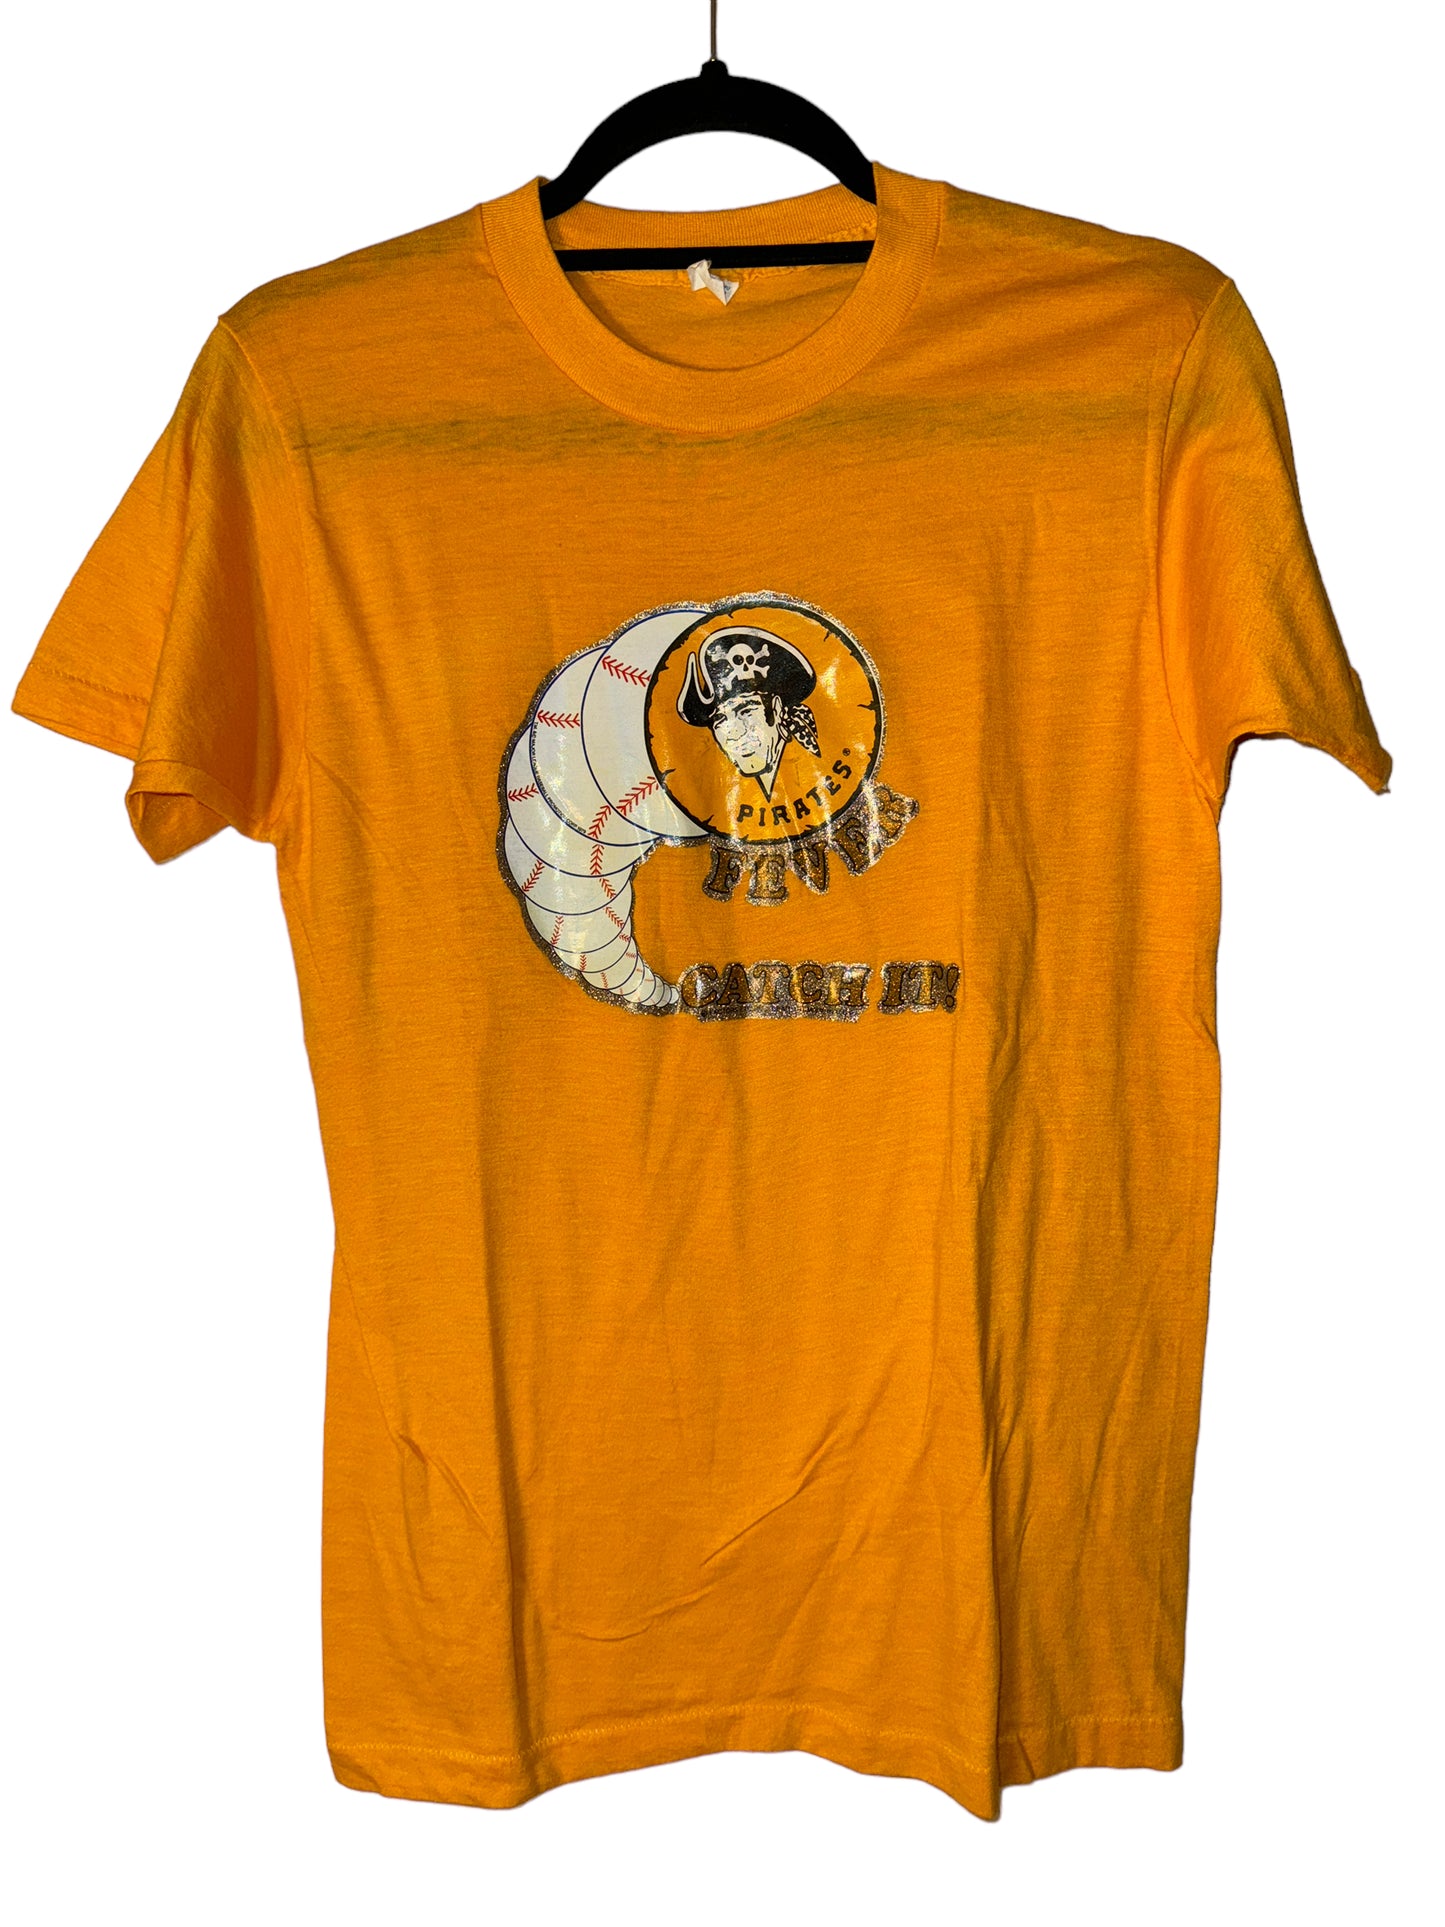 Vintage Pittsburgh Pirates Shirt 1970s Baseball Tee